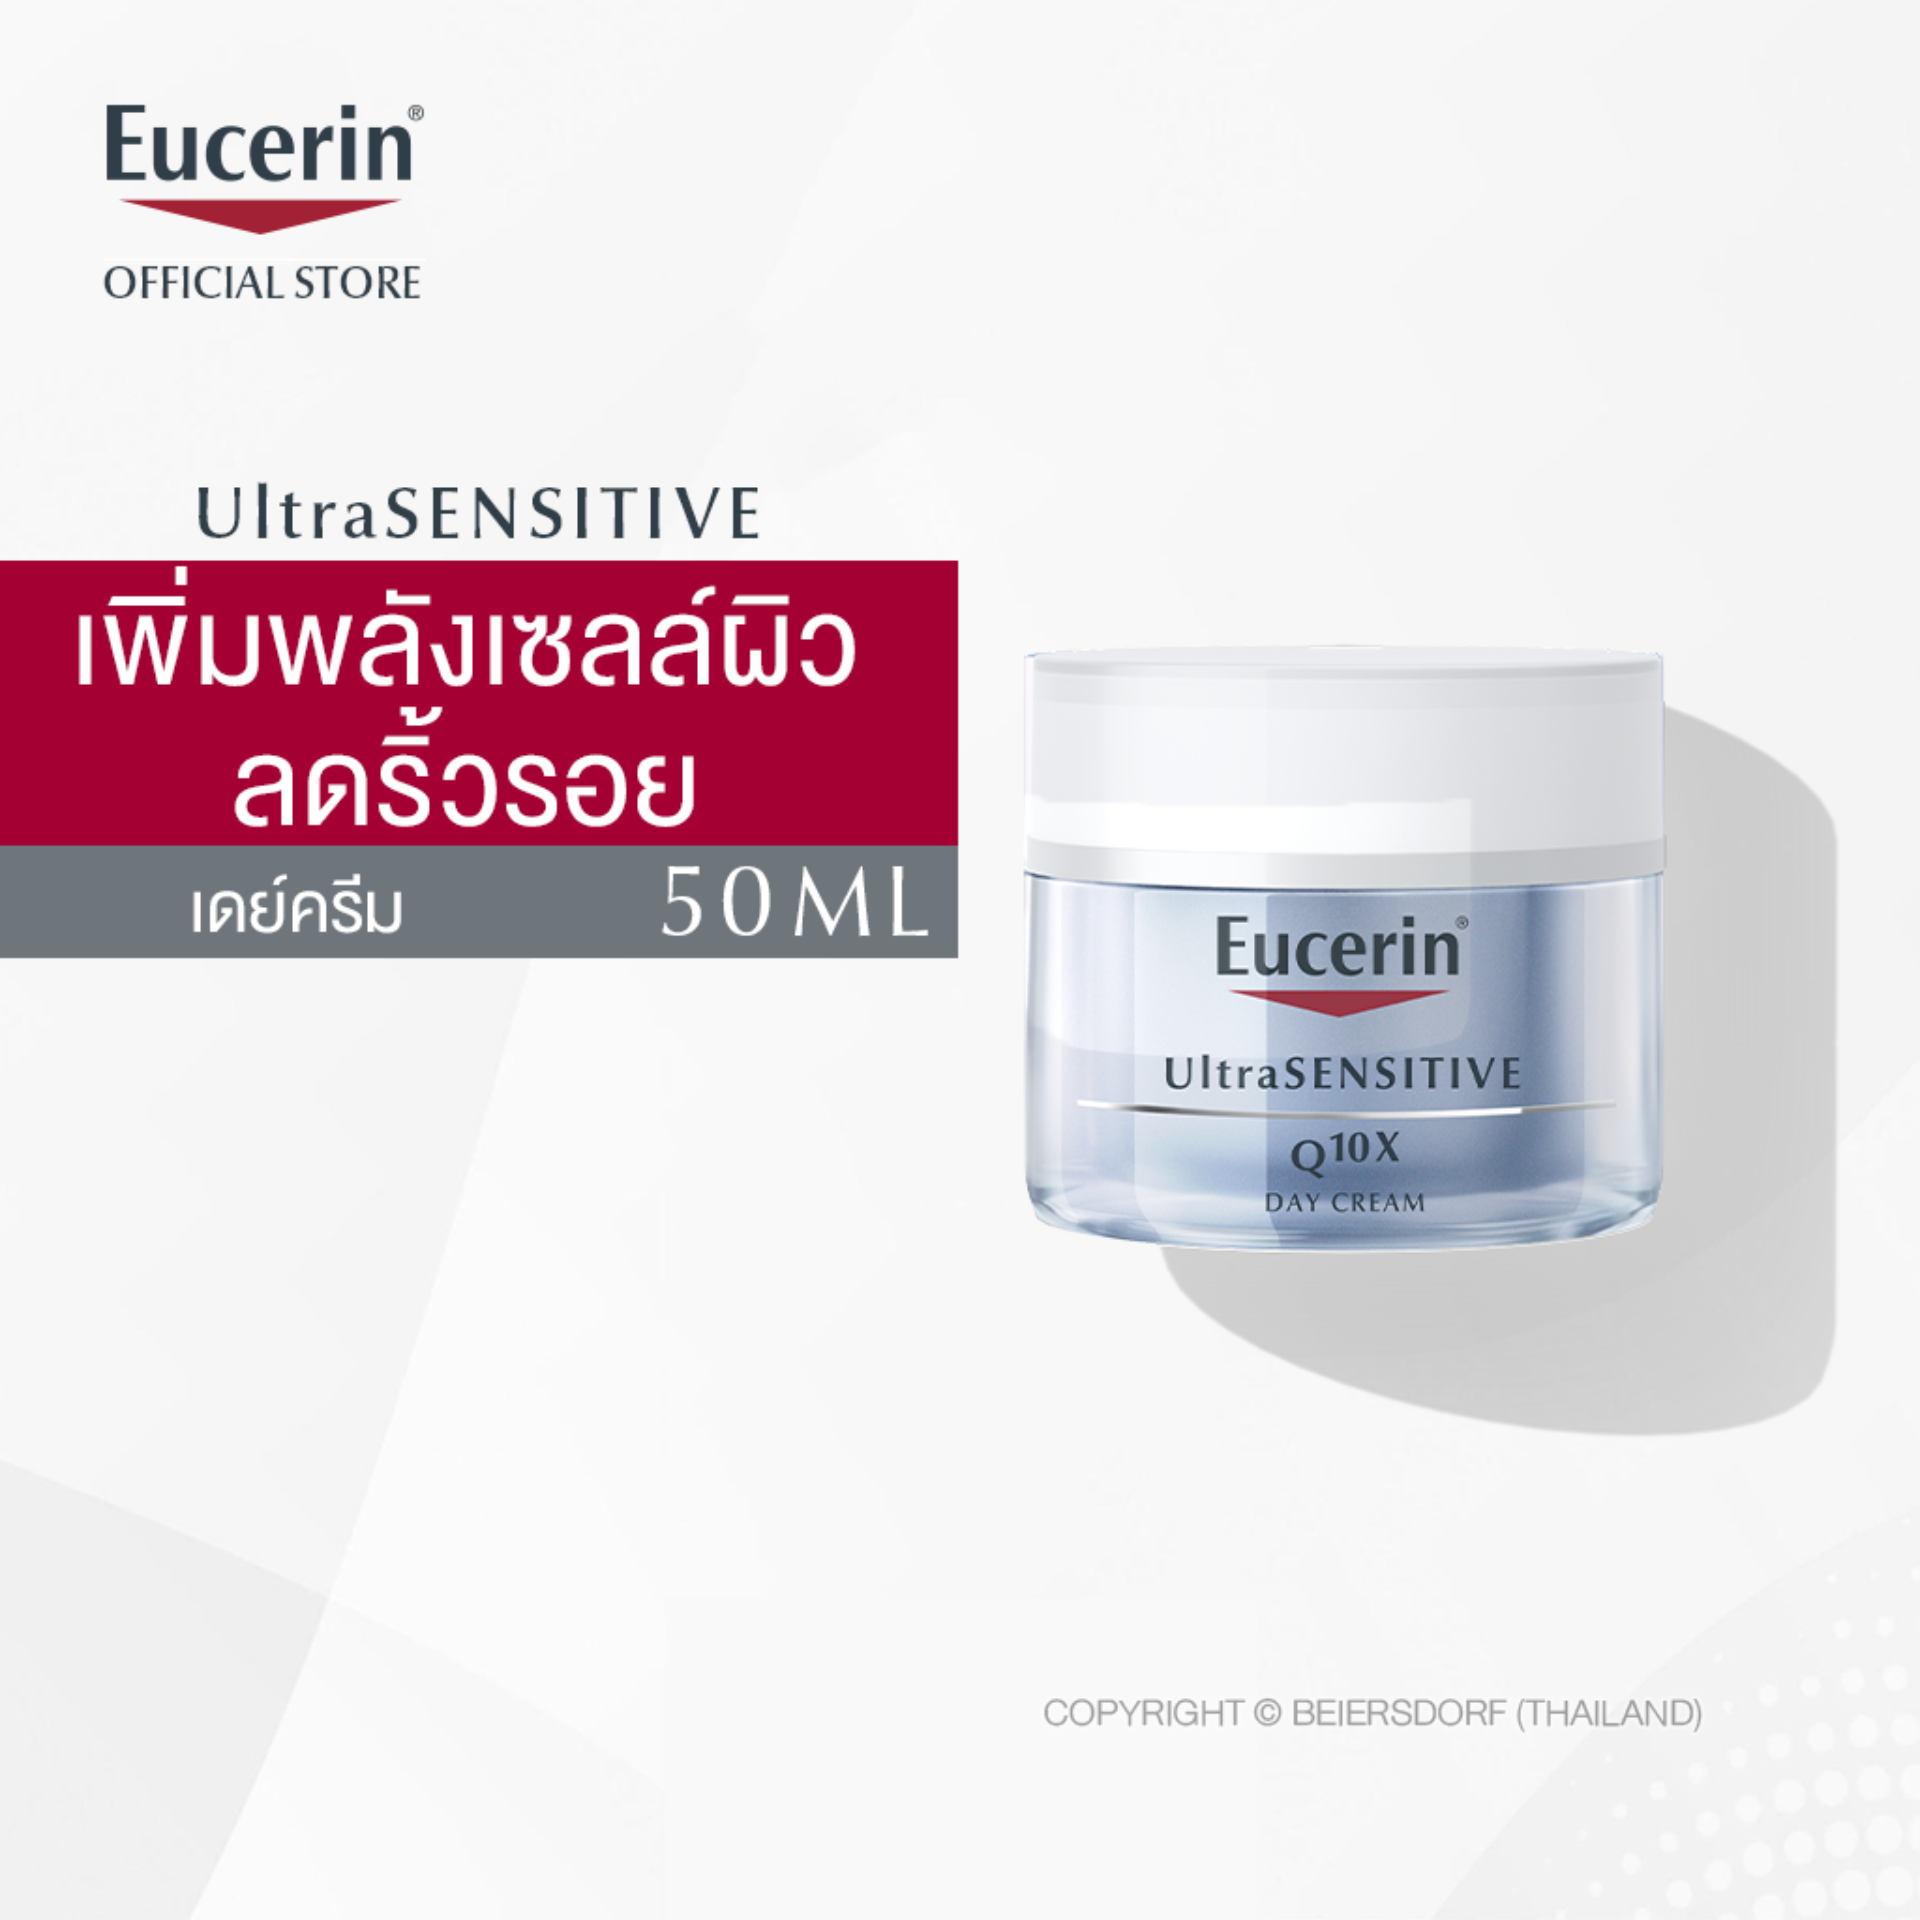 Eucerin UltraSENSITIVE Q10X Day Cream 50ml ยูเซอริน อัลตร้าเซ็นซิทีฟ คิวเท็นเอ็กซ์ เดย์ครีม 50มล (ครีมบำรุงผิวหน้า สำหรับผิวบอบบางแพ้ง่าย)